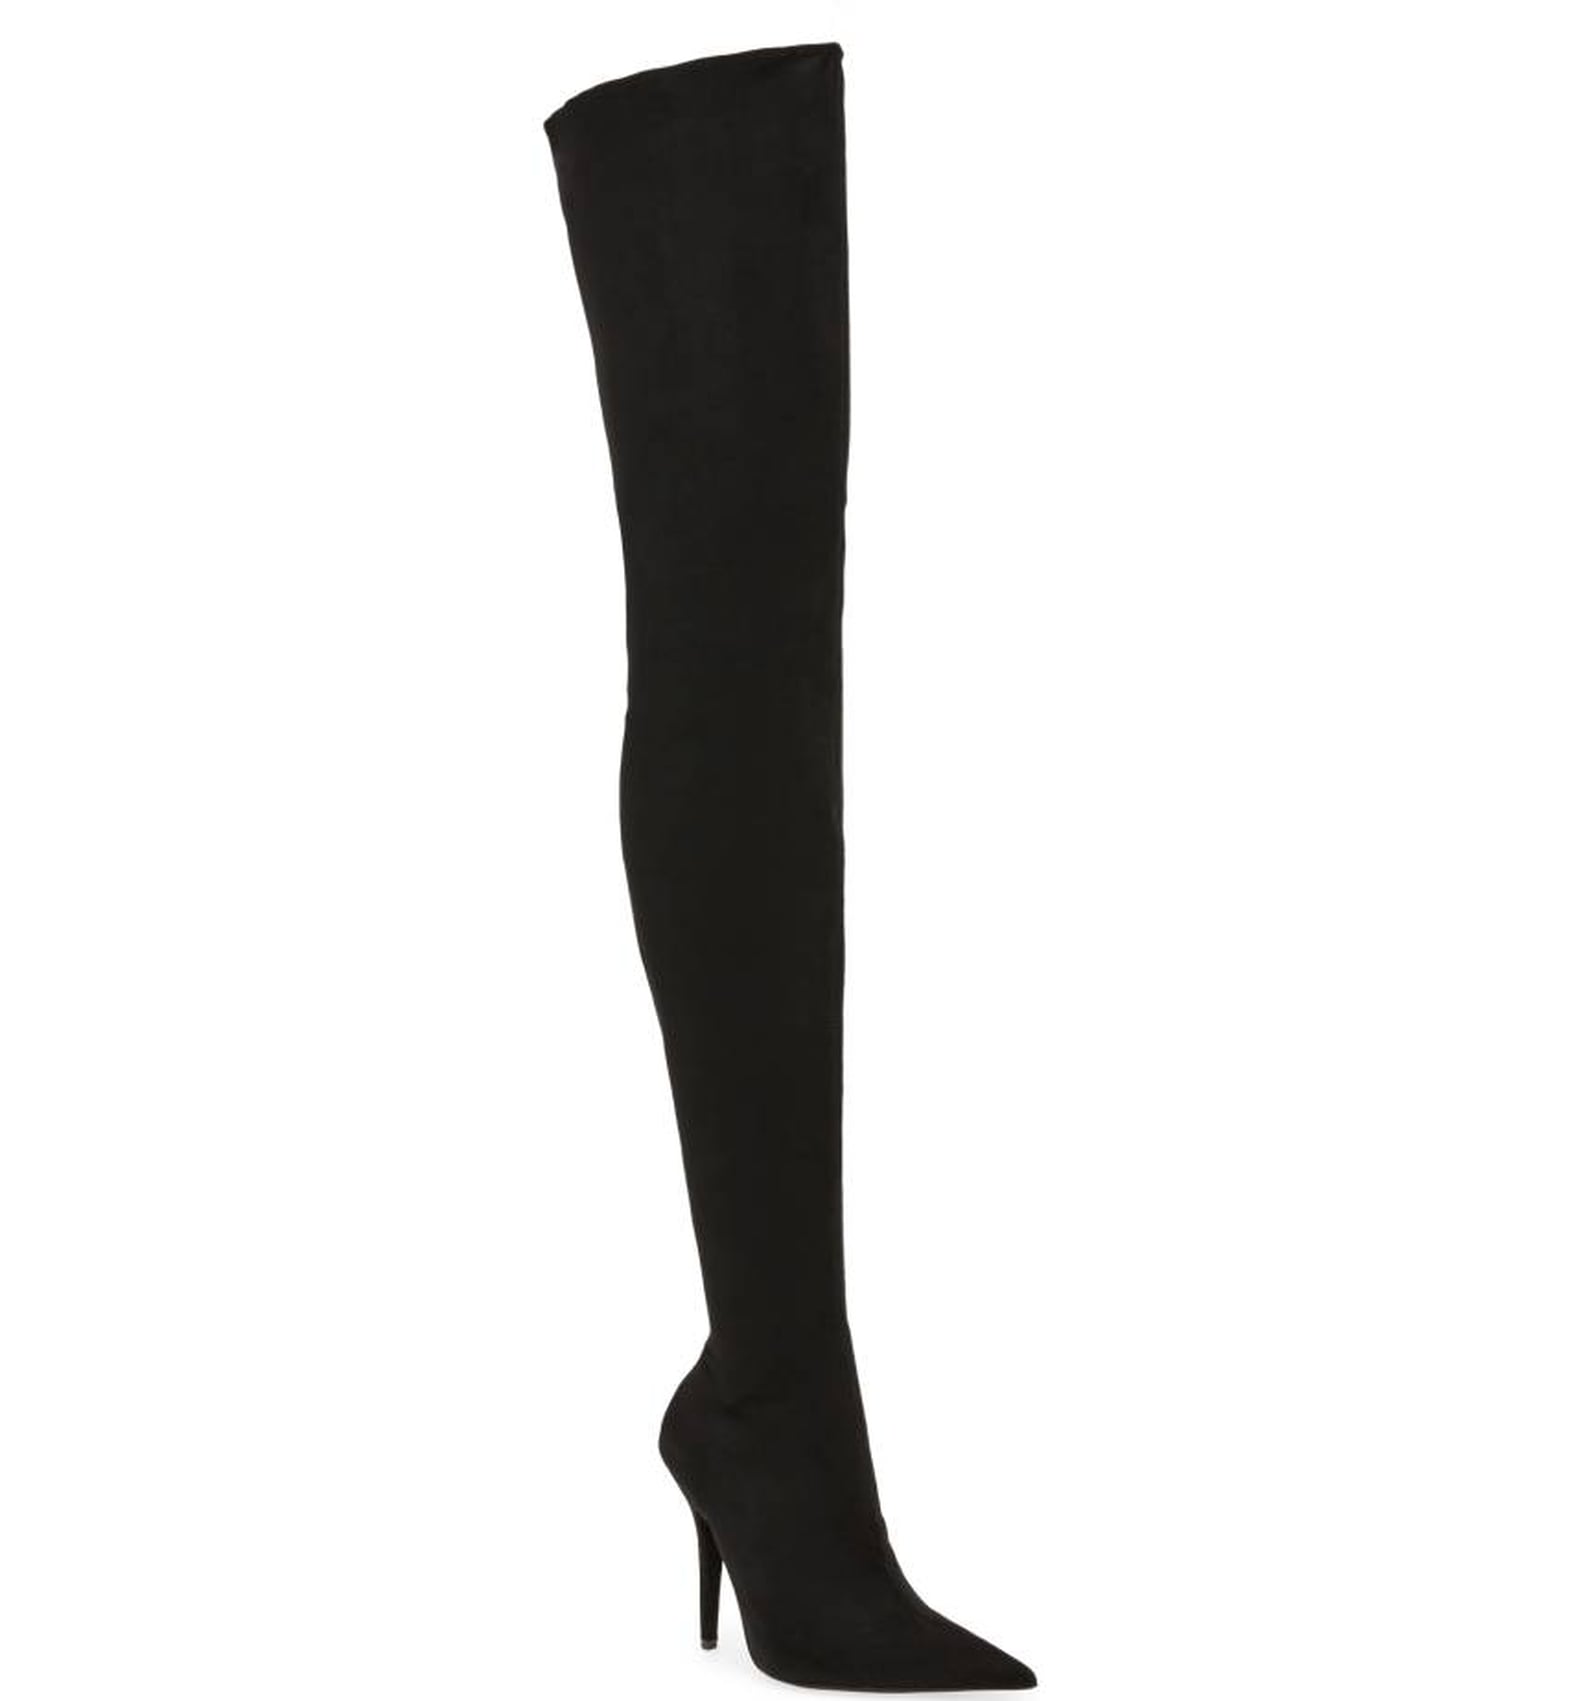 Angelina Jolie Wearing Black Suede Boots | POPSUGAR Fashion